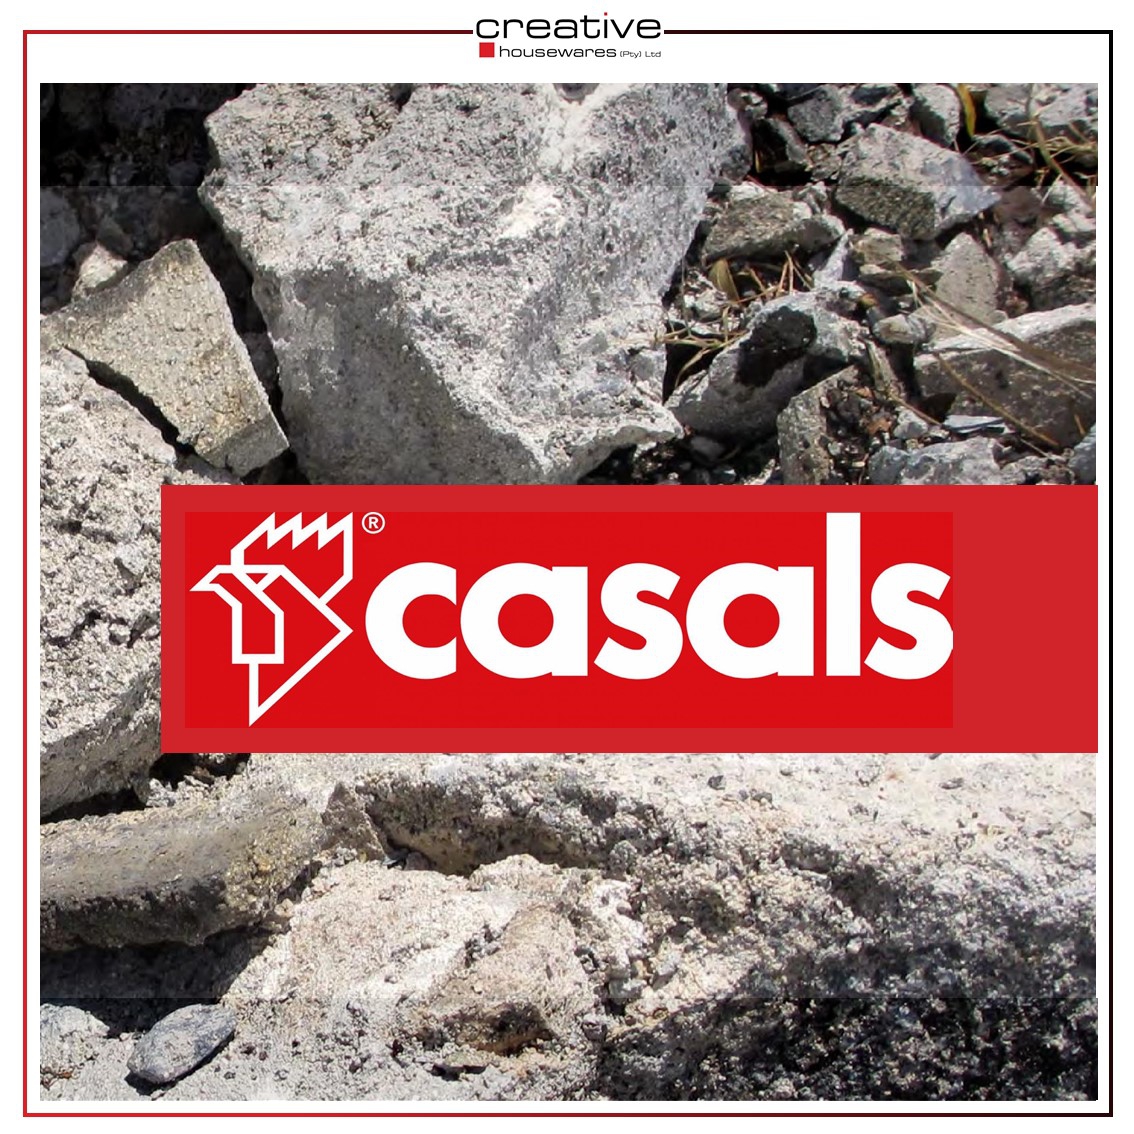 Creative Housewares - Casals 2021 Catalogue Catalogue